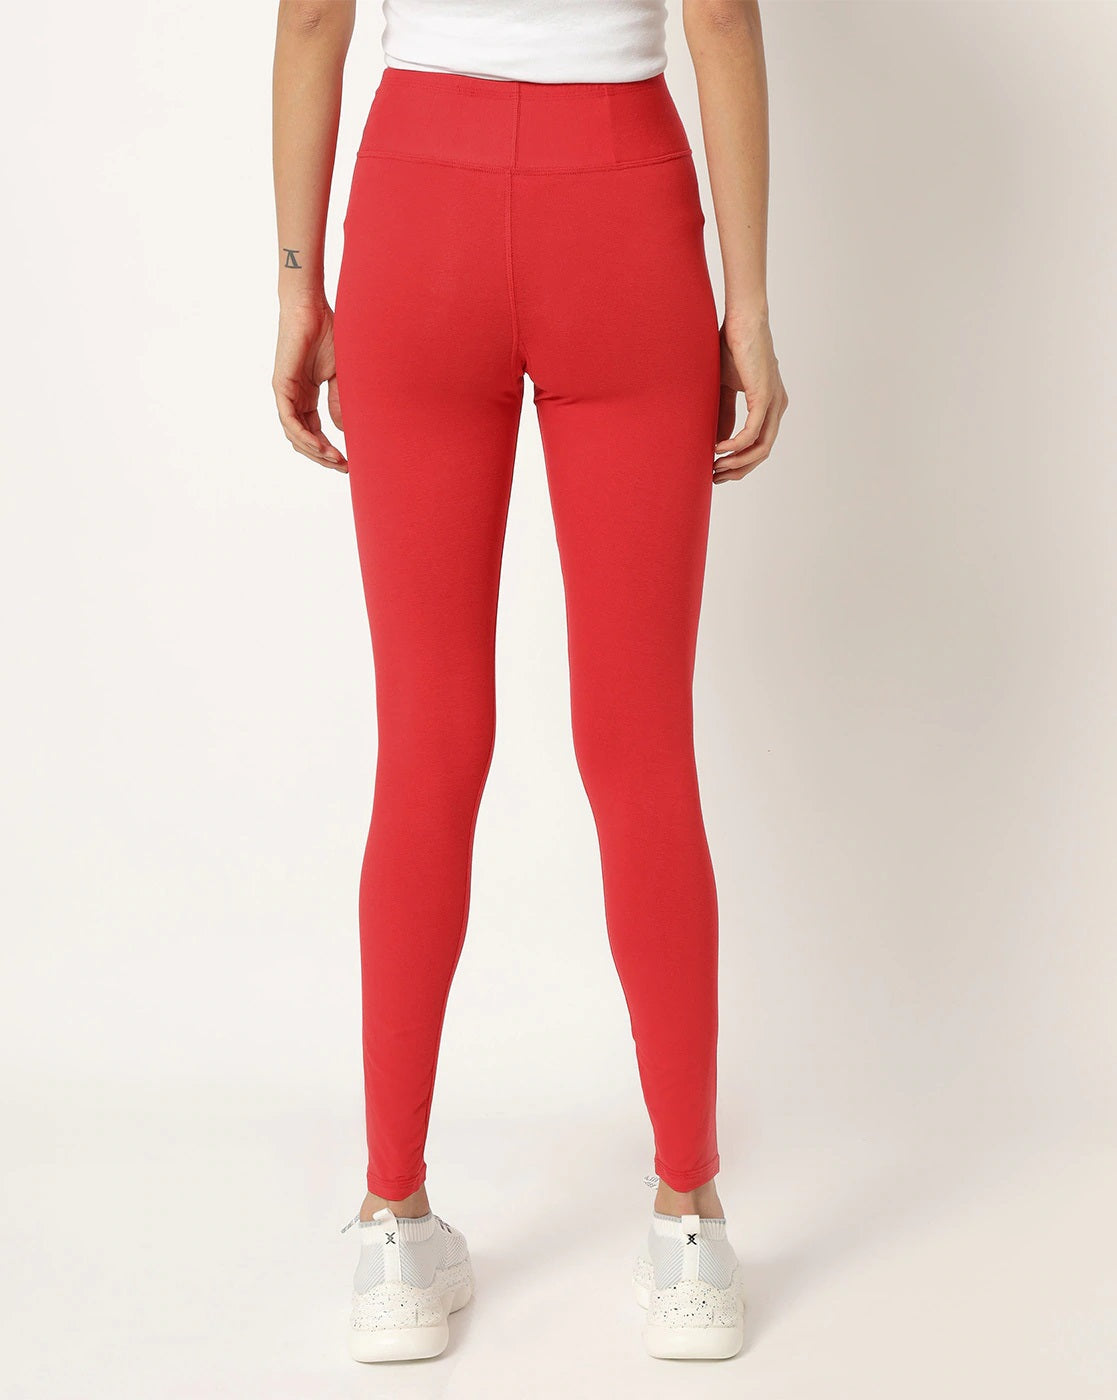 Daisy Street Active Swirly high waist leggings in red | ASOS